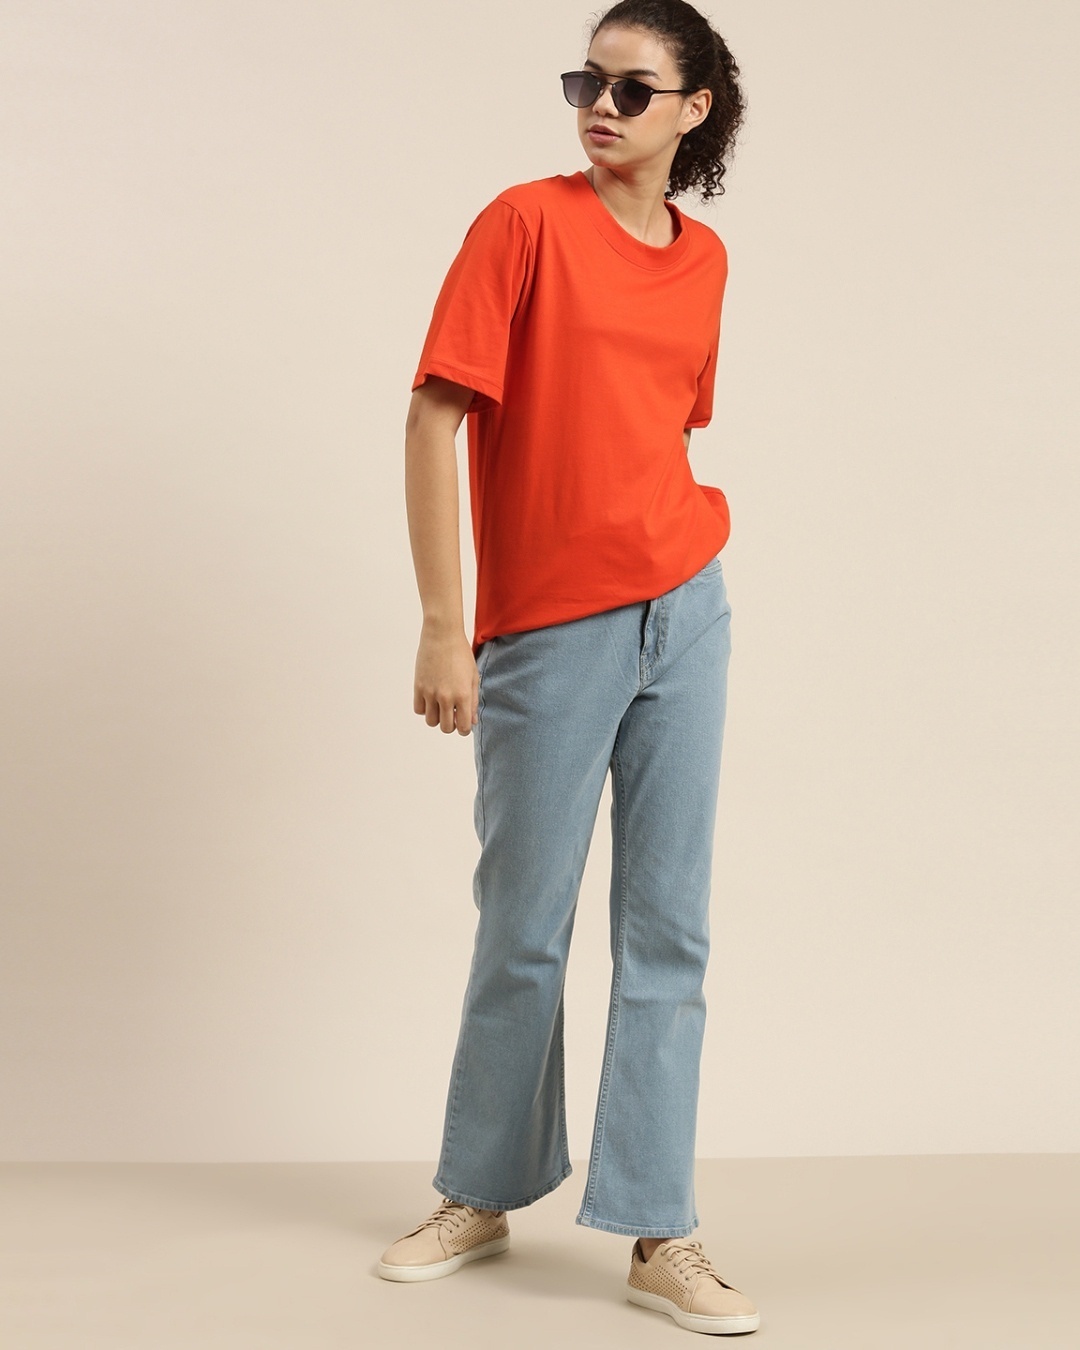 Shop Women's Orange Oversized Fit T Shirt